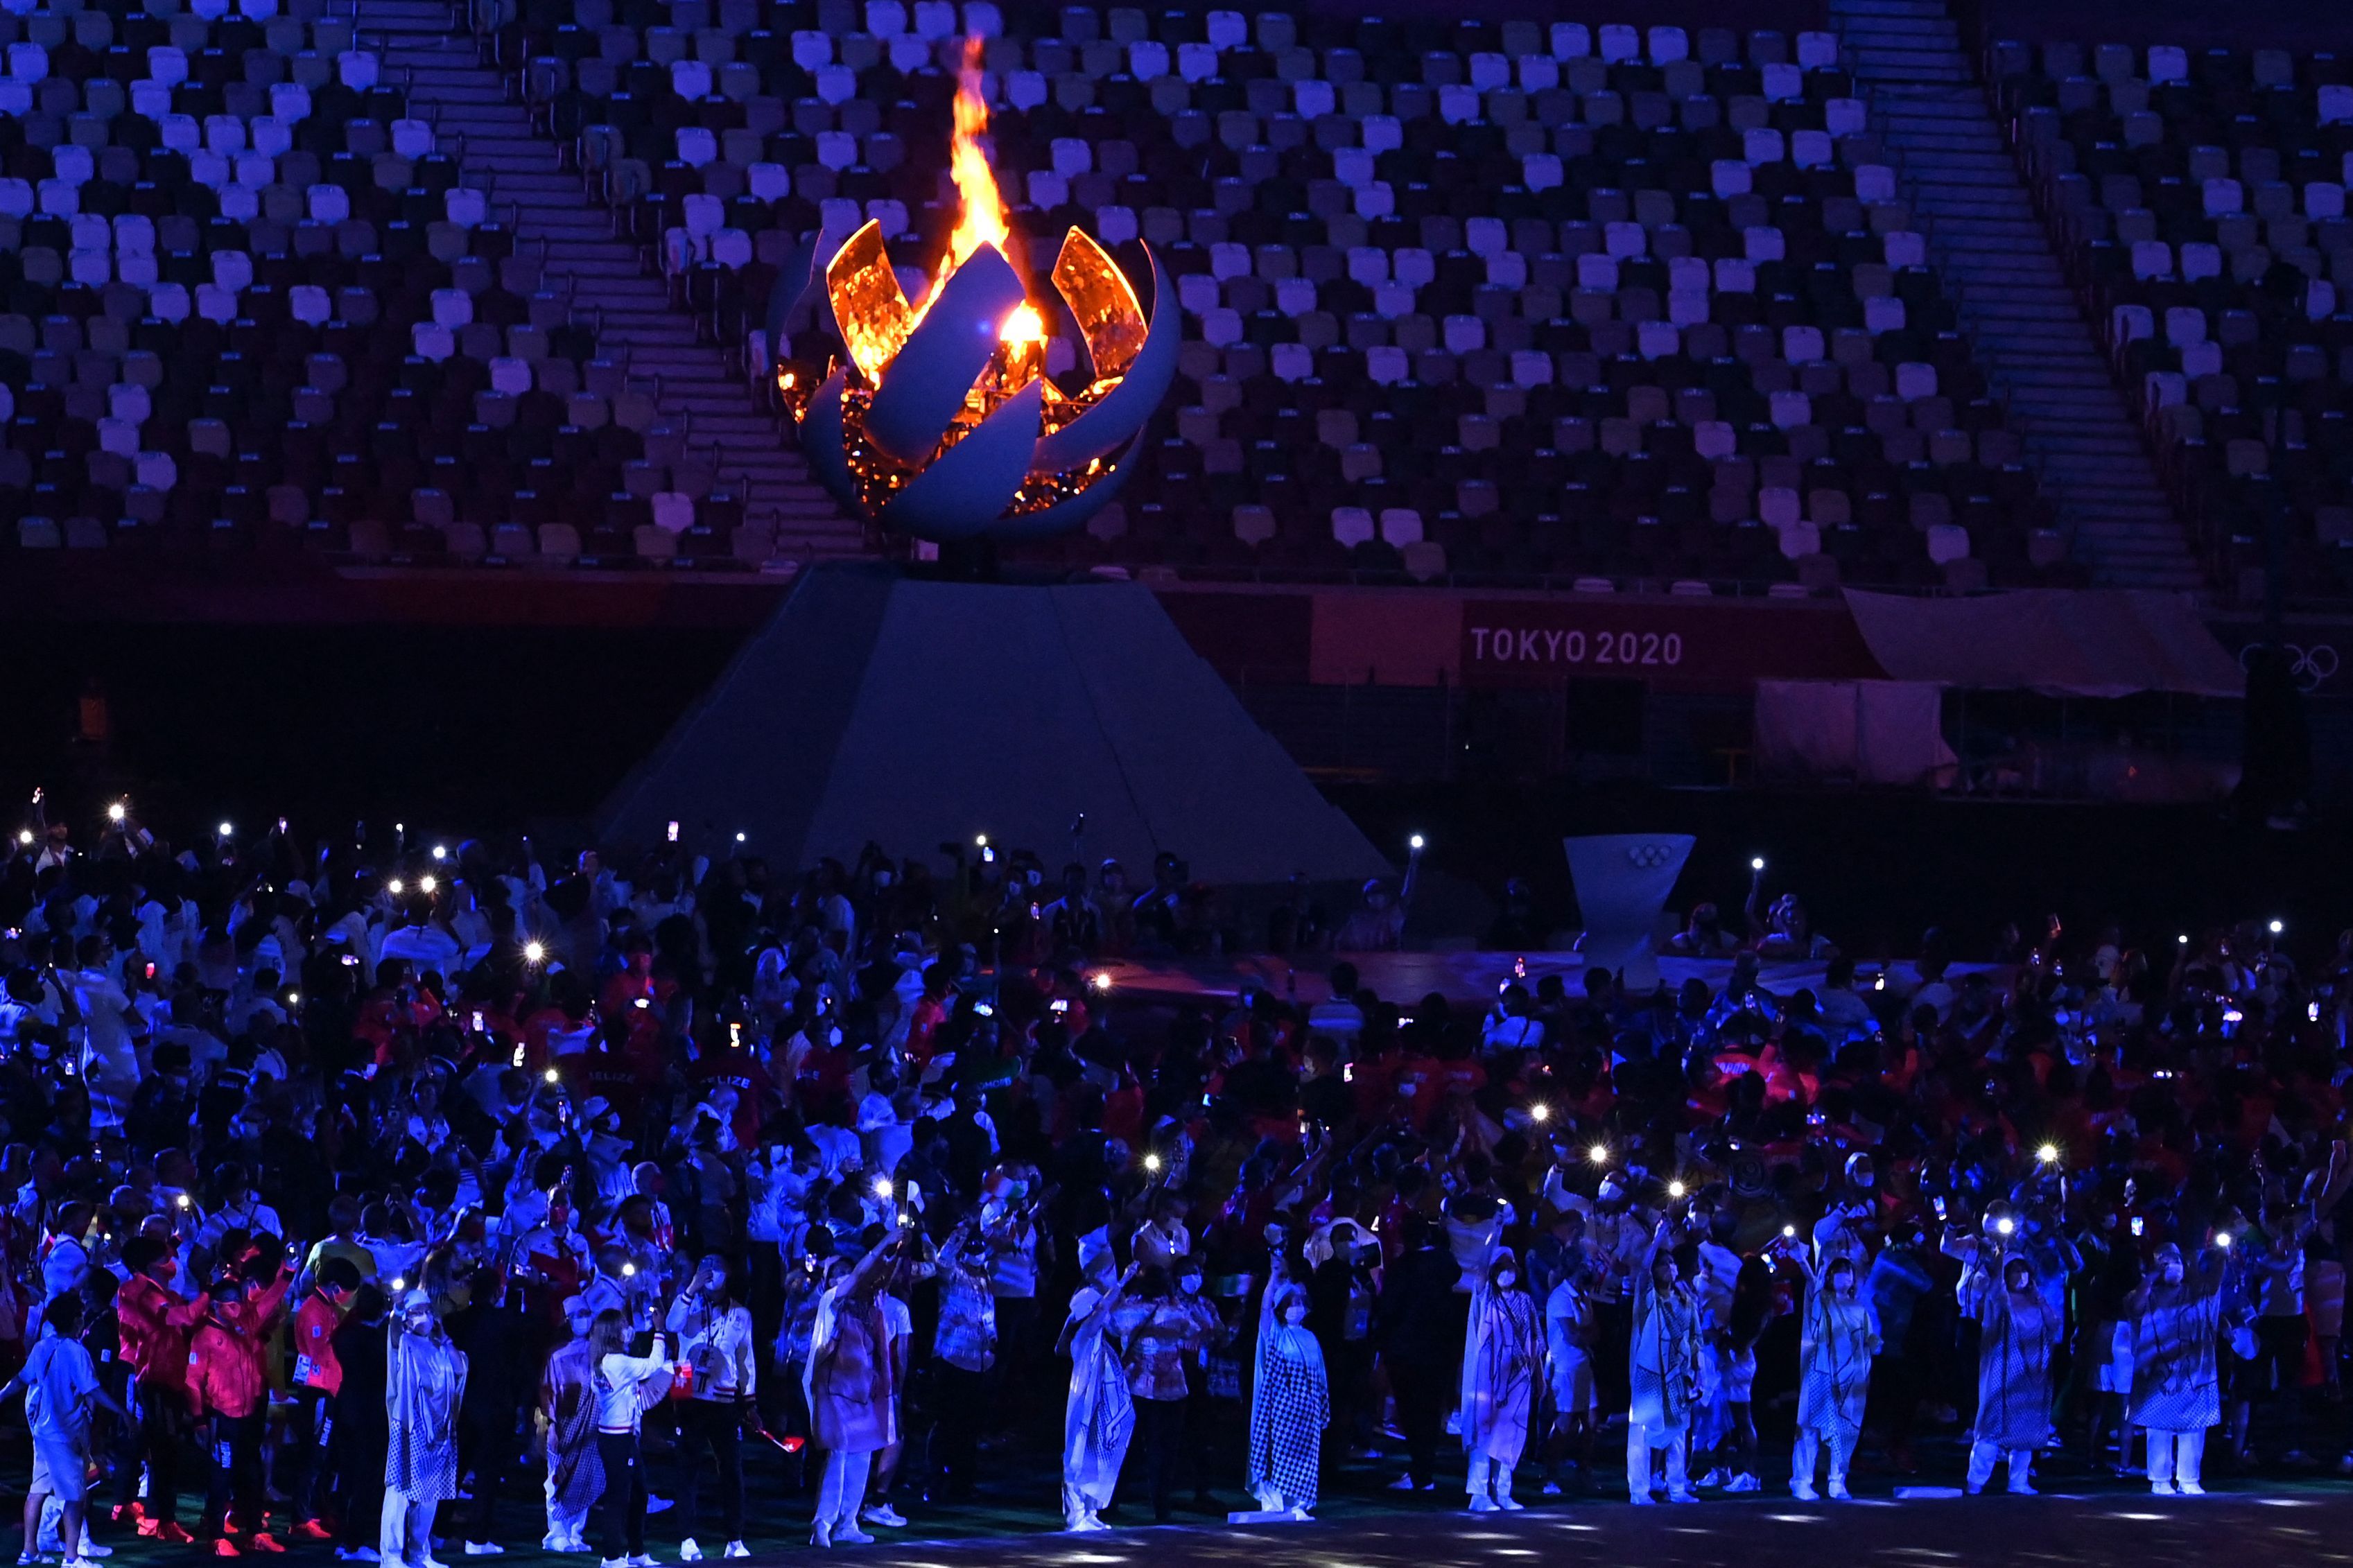 The olympic cauldron surrounded by athletes.